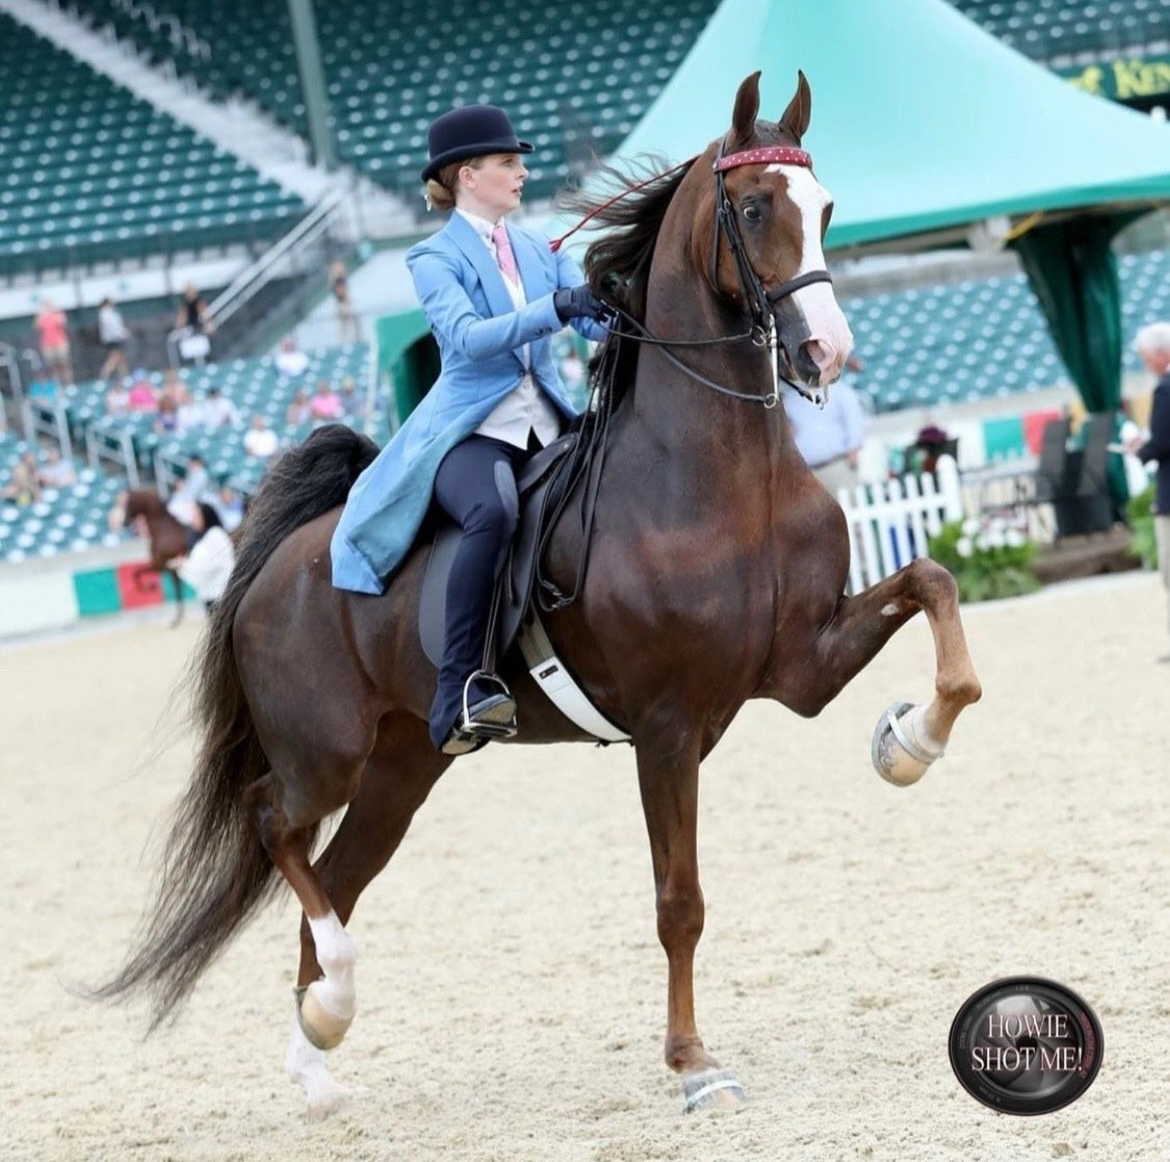 photo of girl riding American Saddlebred horse at Lexington Jr. League horse show